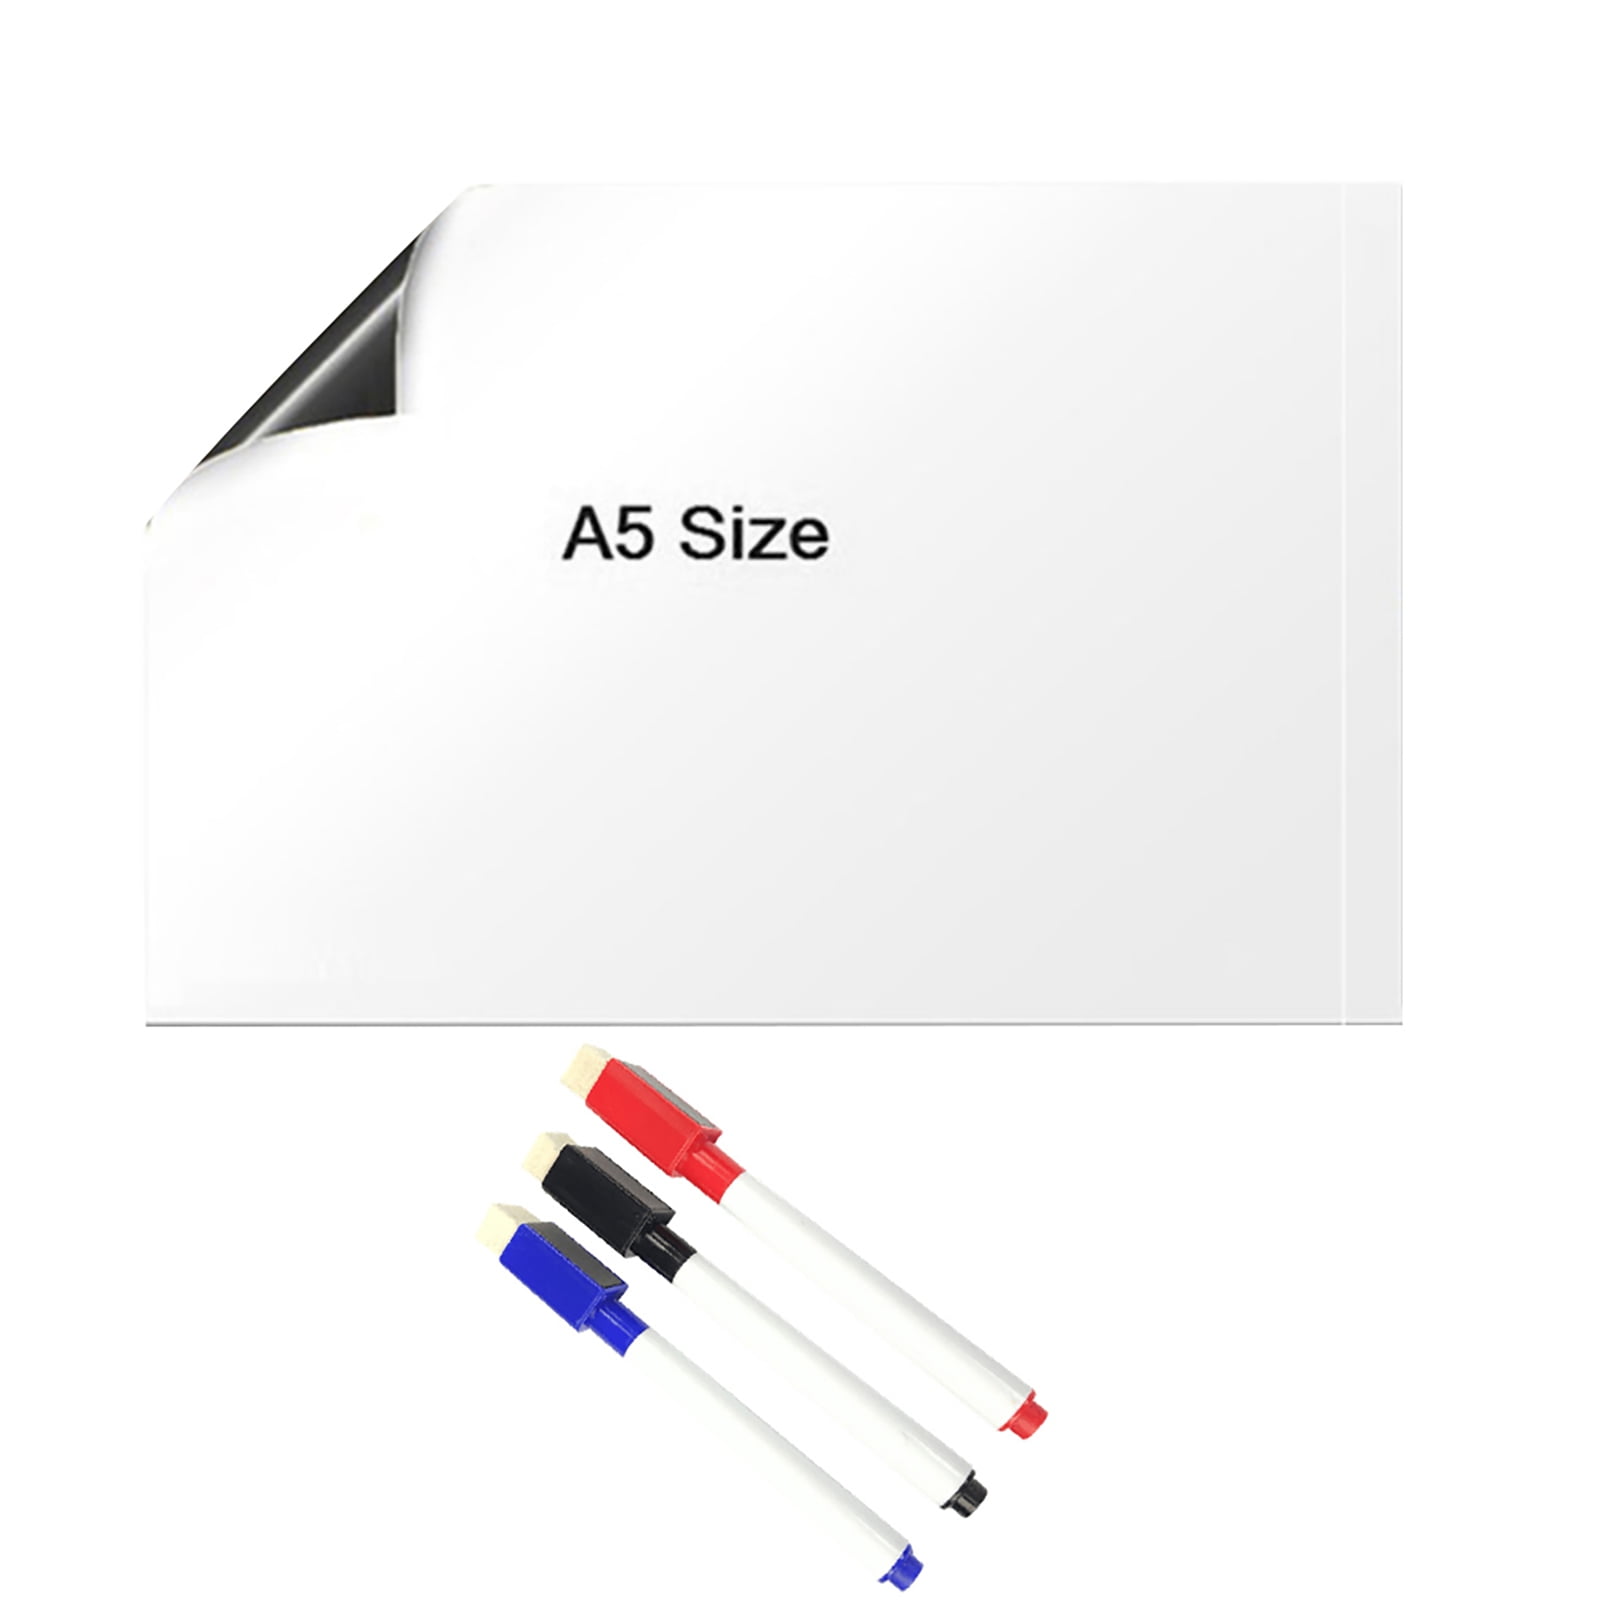 Dry Erase Sheets, Self-Adhesive, White, 5 Sheets per Pack, 3 Packs